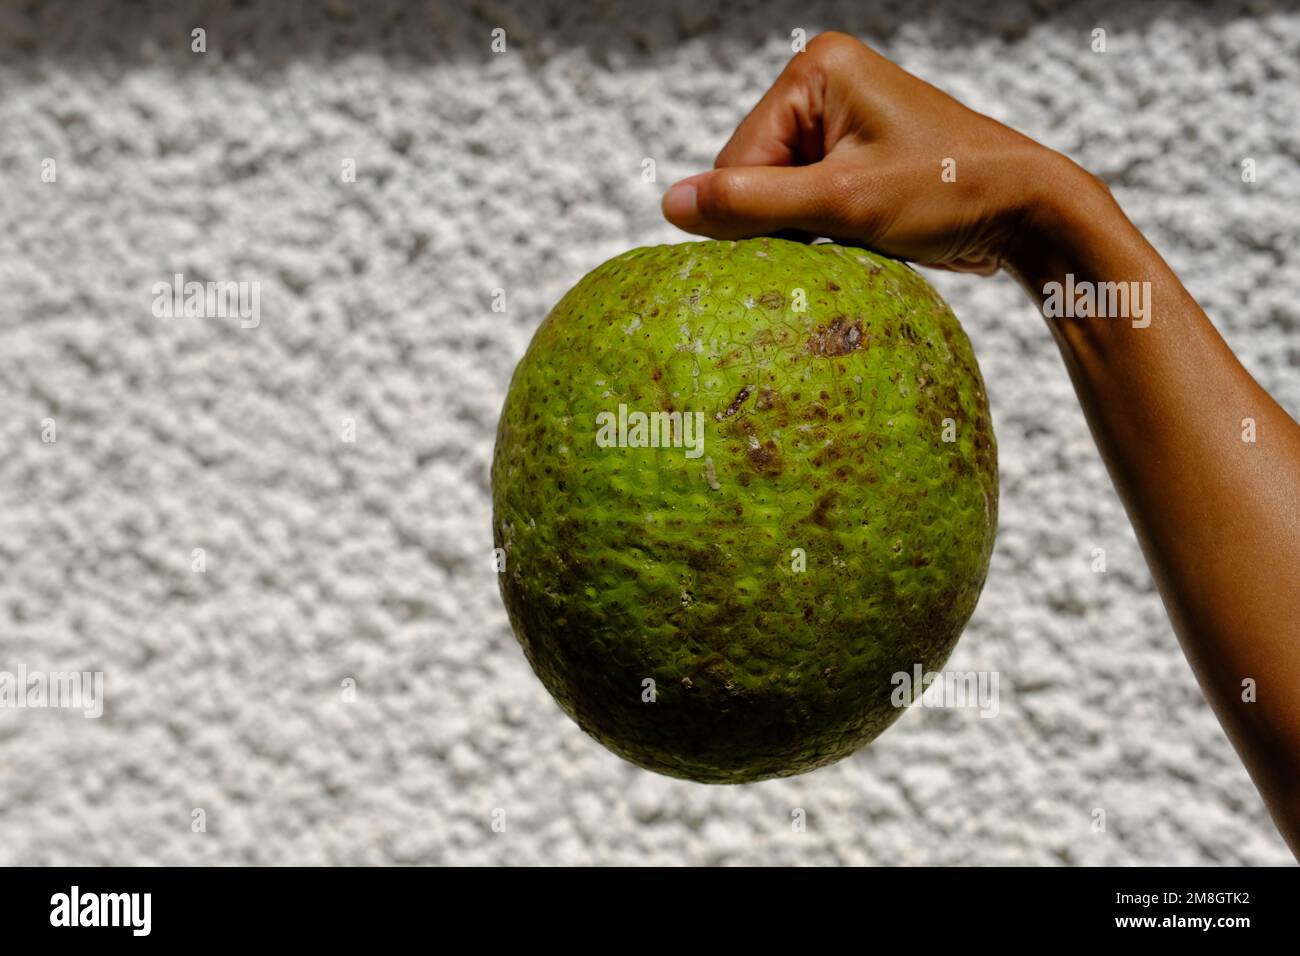 Indonesia Batam - Breadfruit Artocarpus altilis Stock Photo